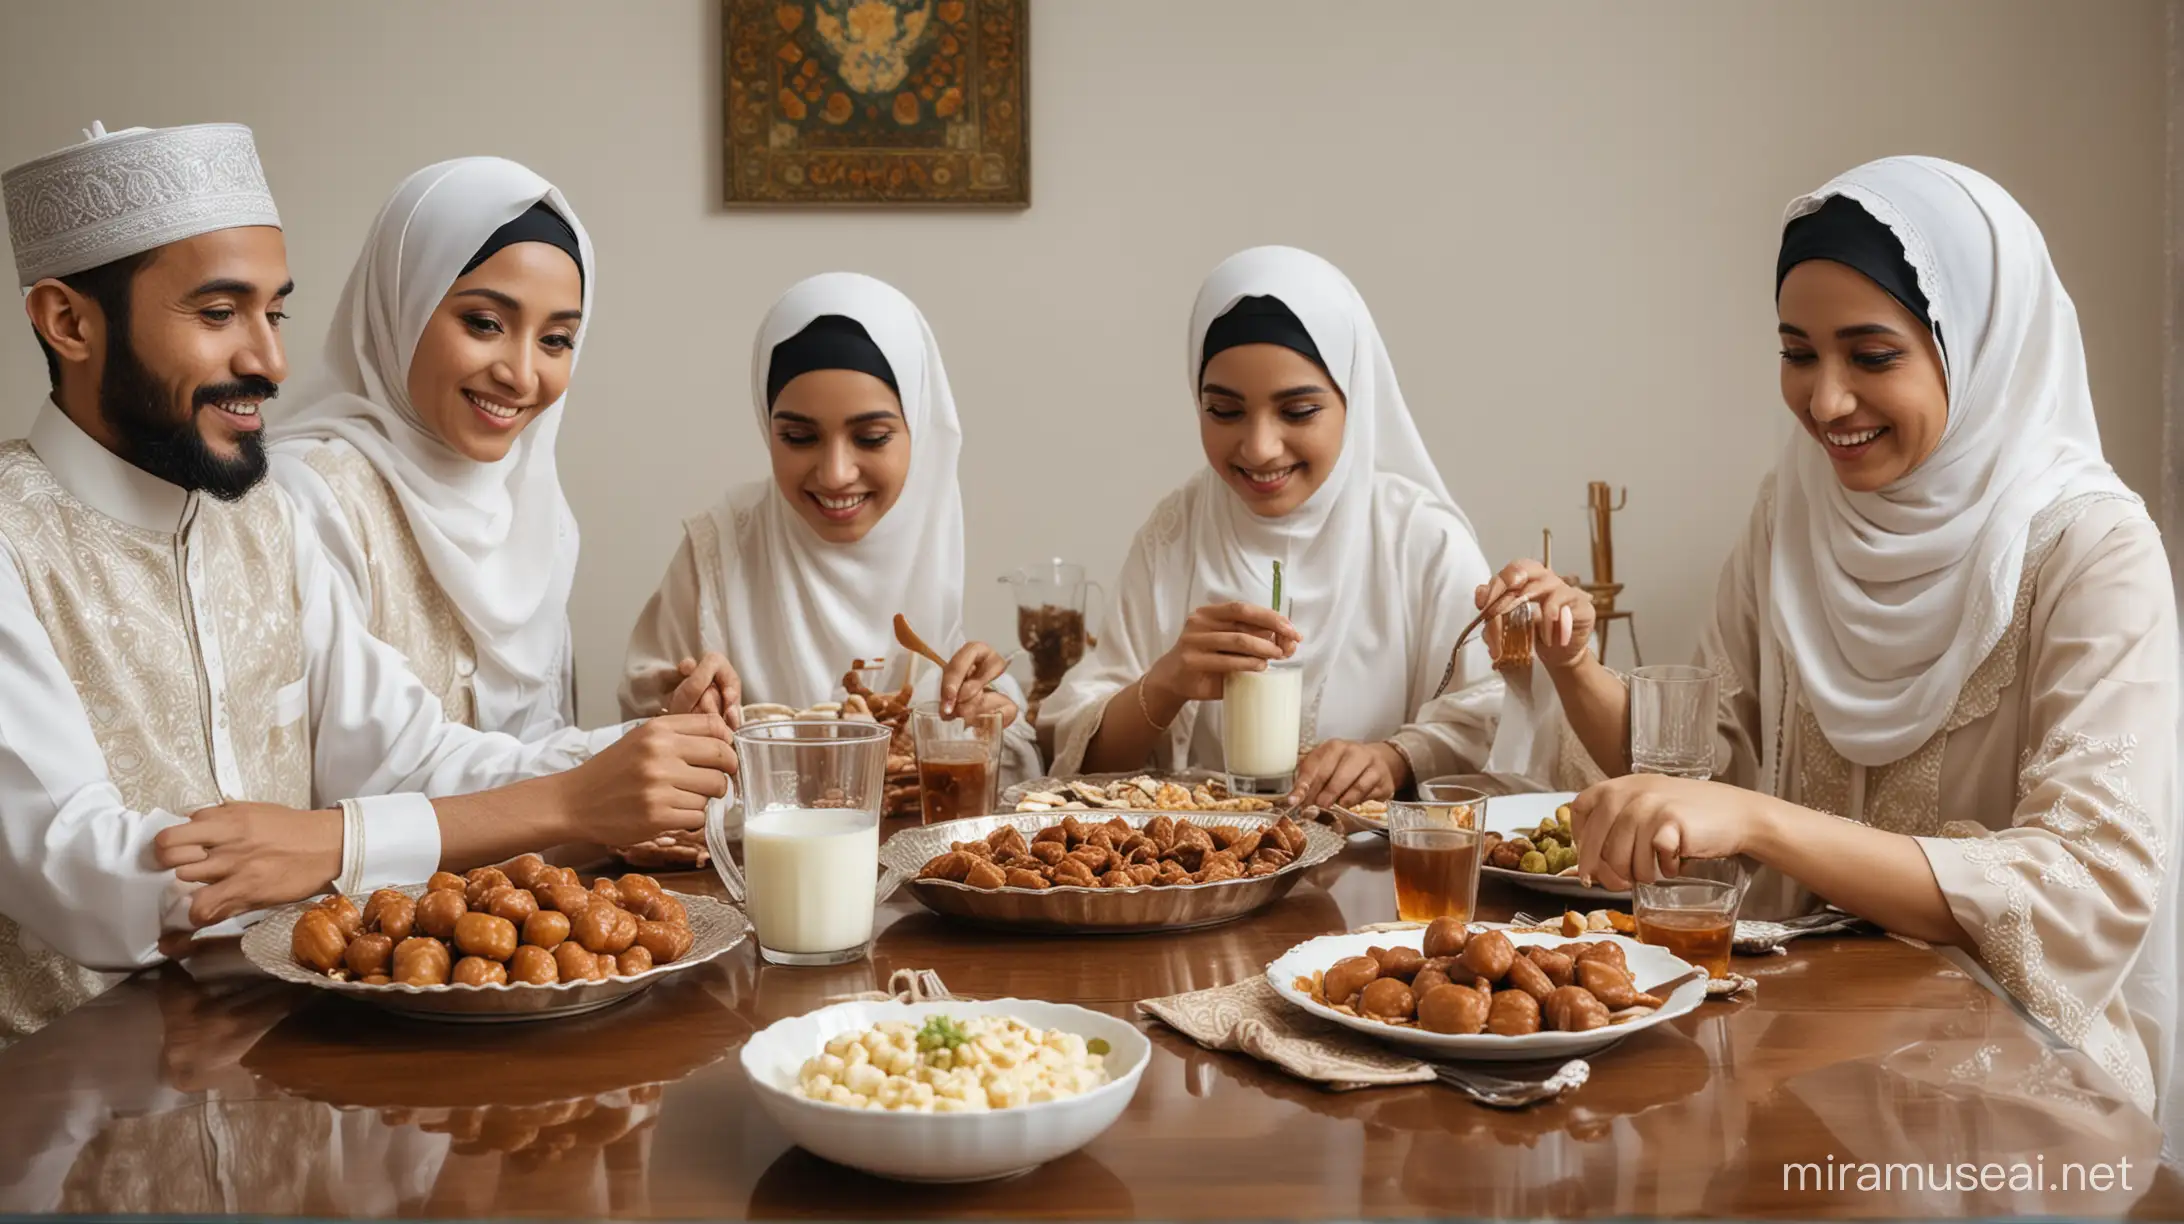 Muslim Family Enjoying Hari Raya with Traditional Dates Appetizer